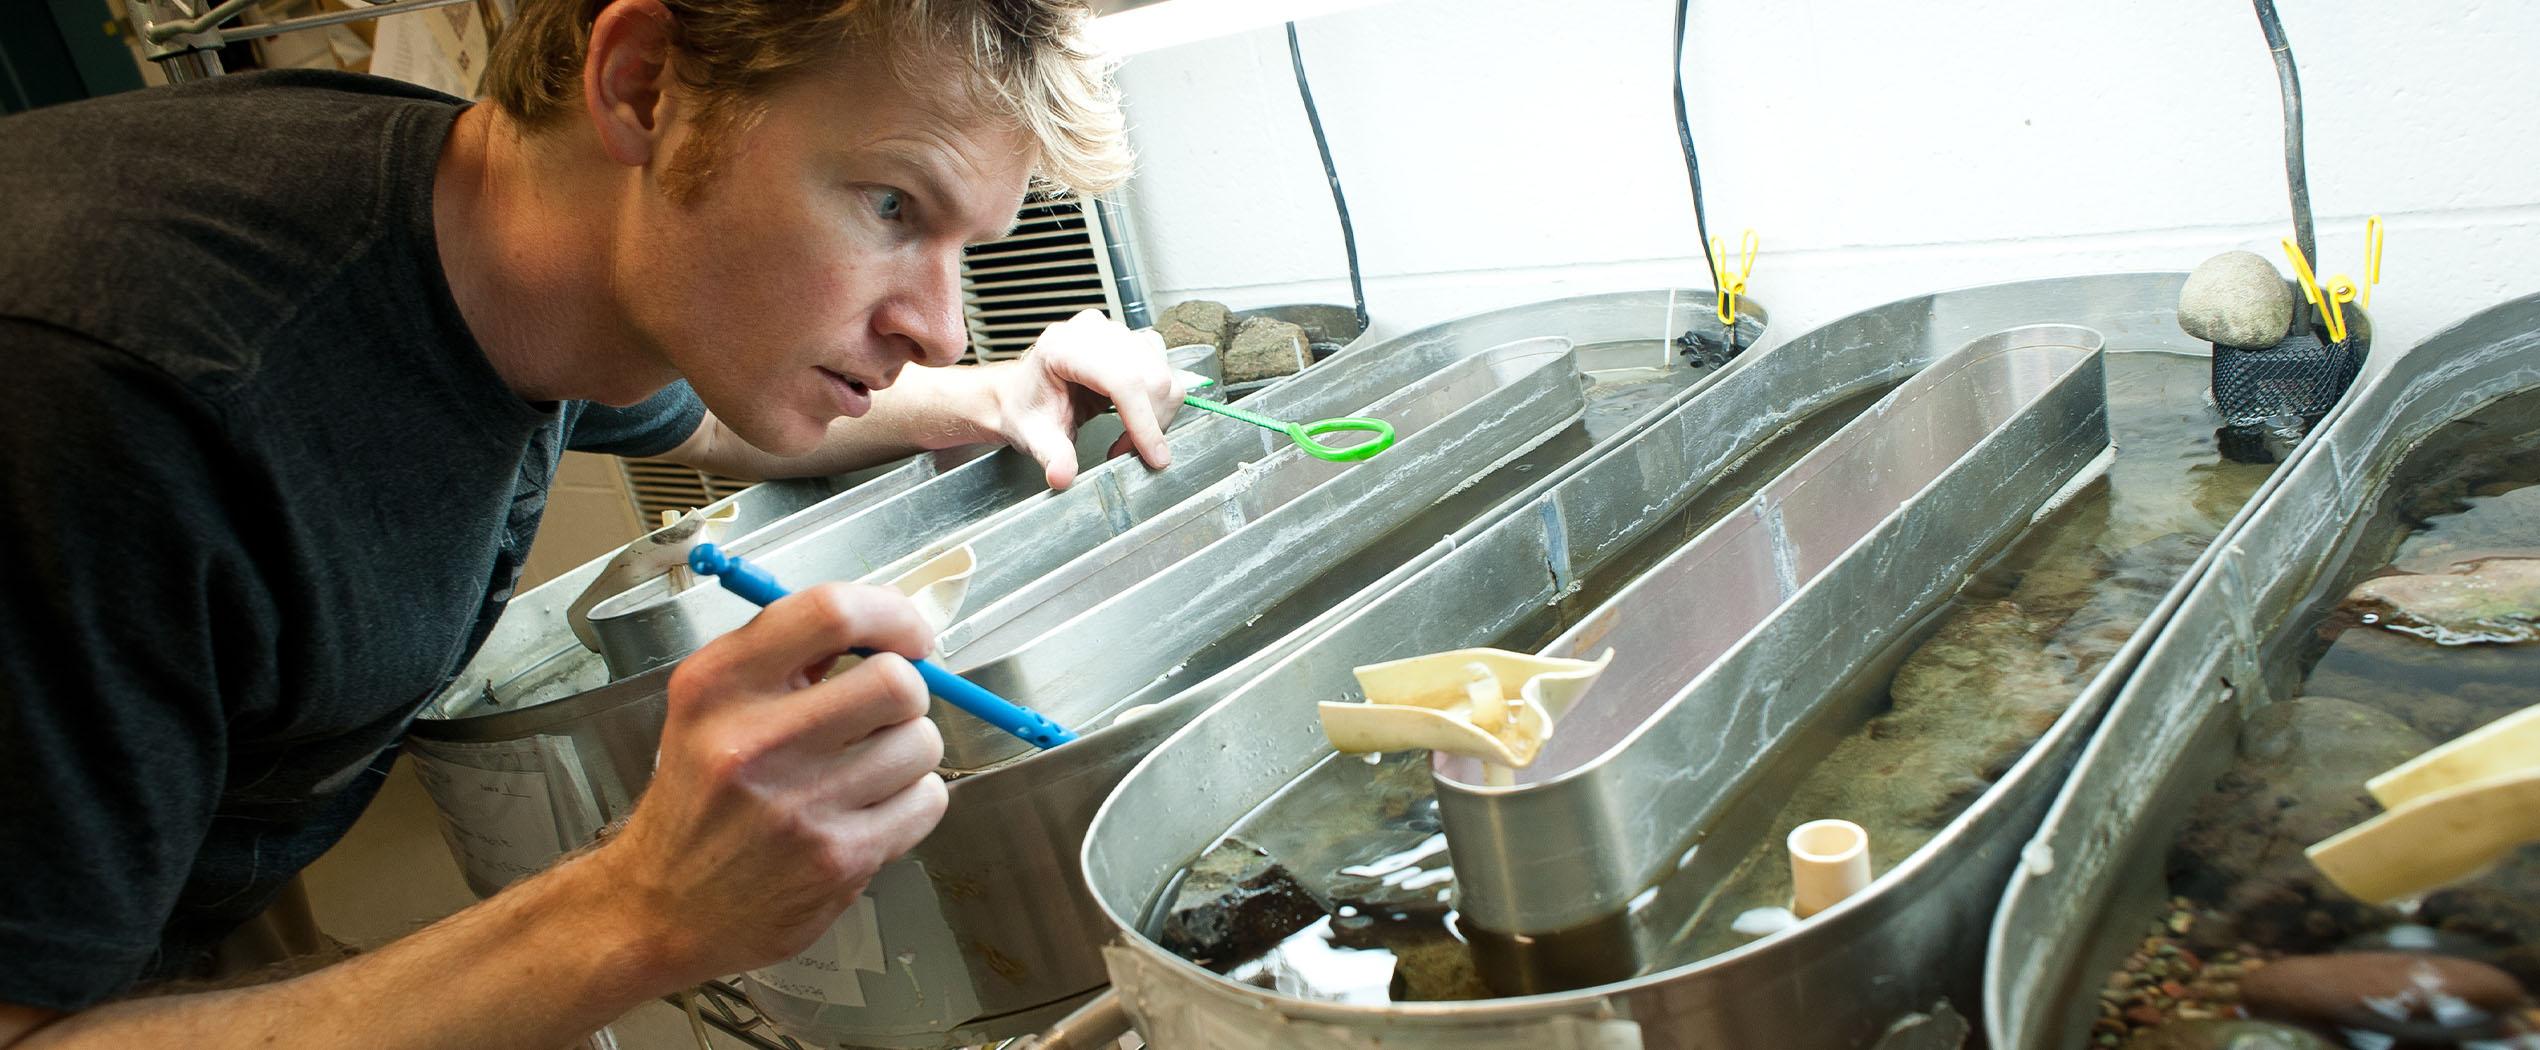 Scientist examining tanks of fish